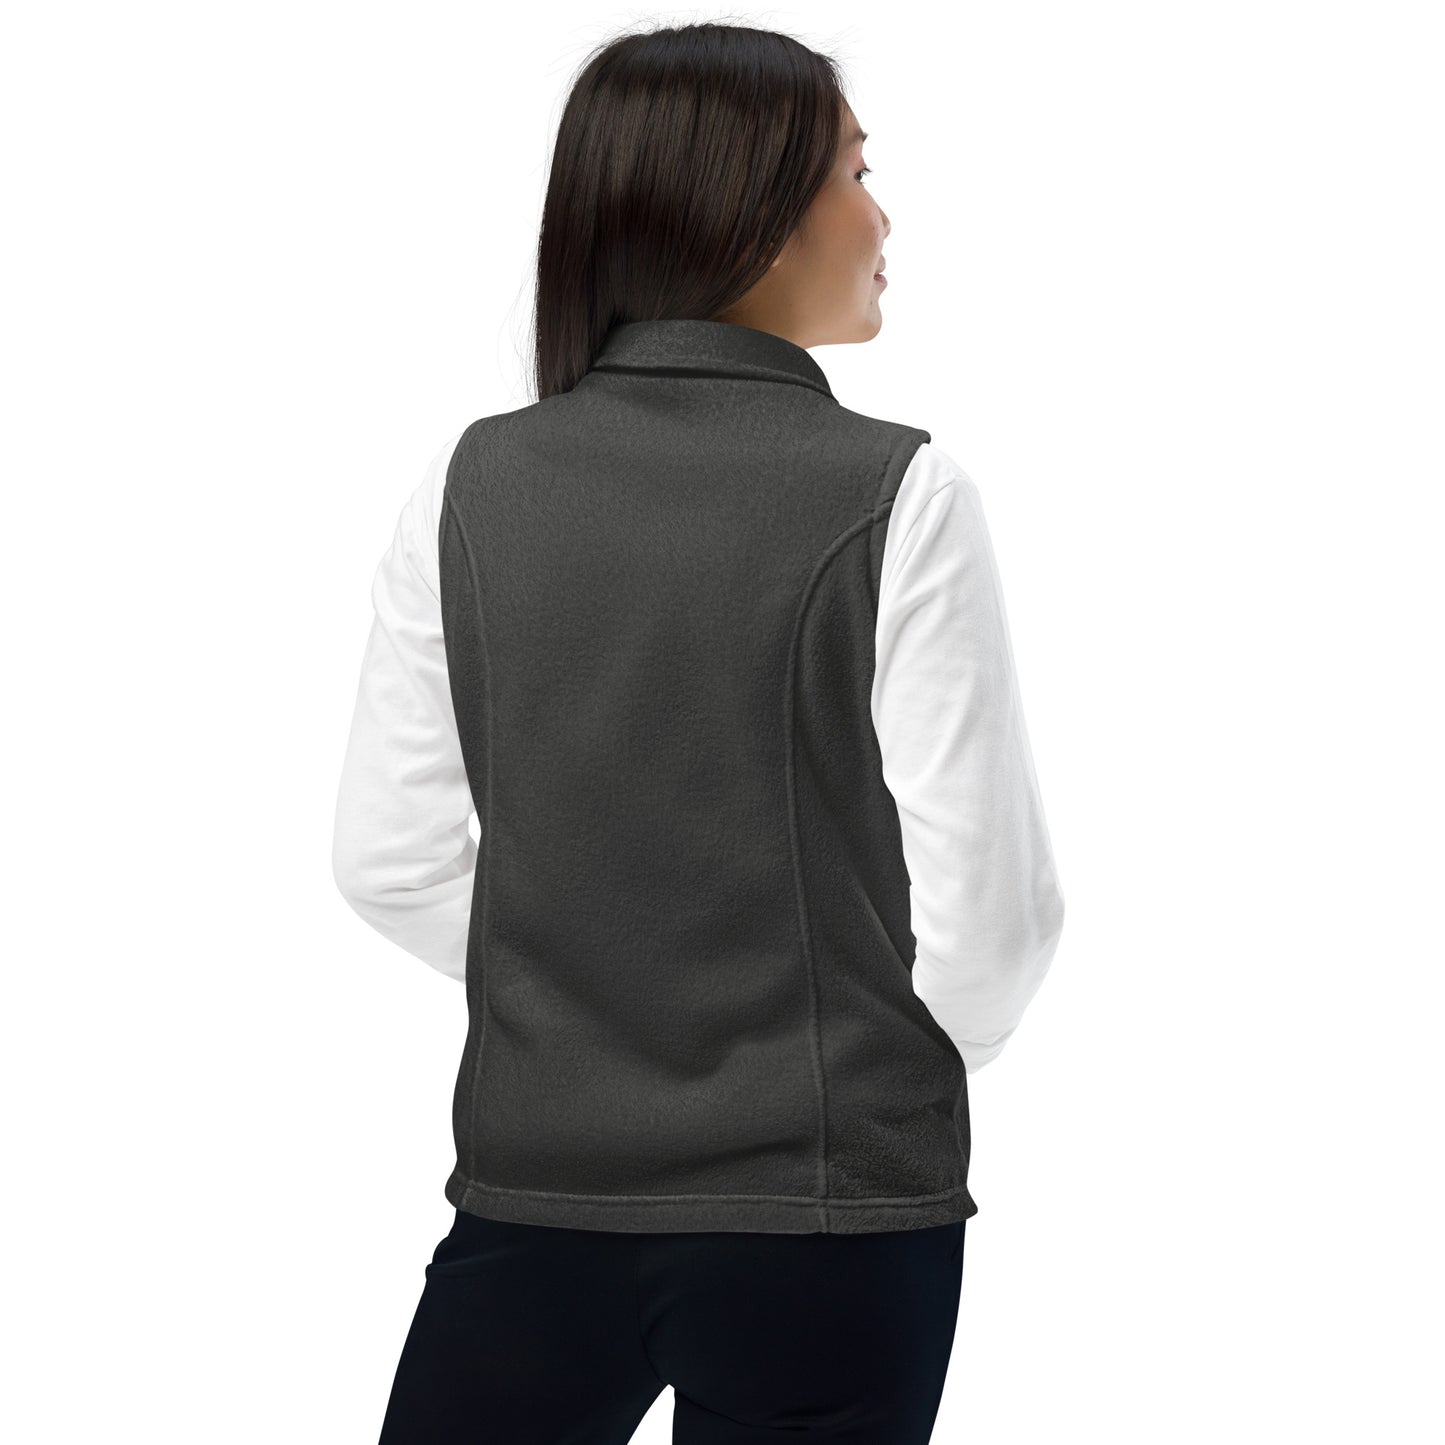 Women’s Columbia fleece vest , flat custom embroidery, grey color cute cat sketch